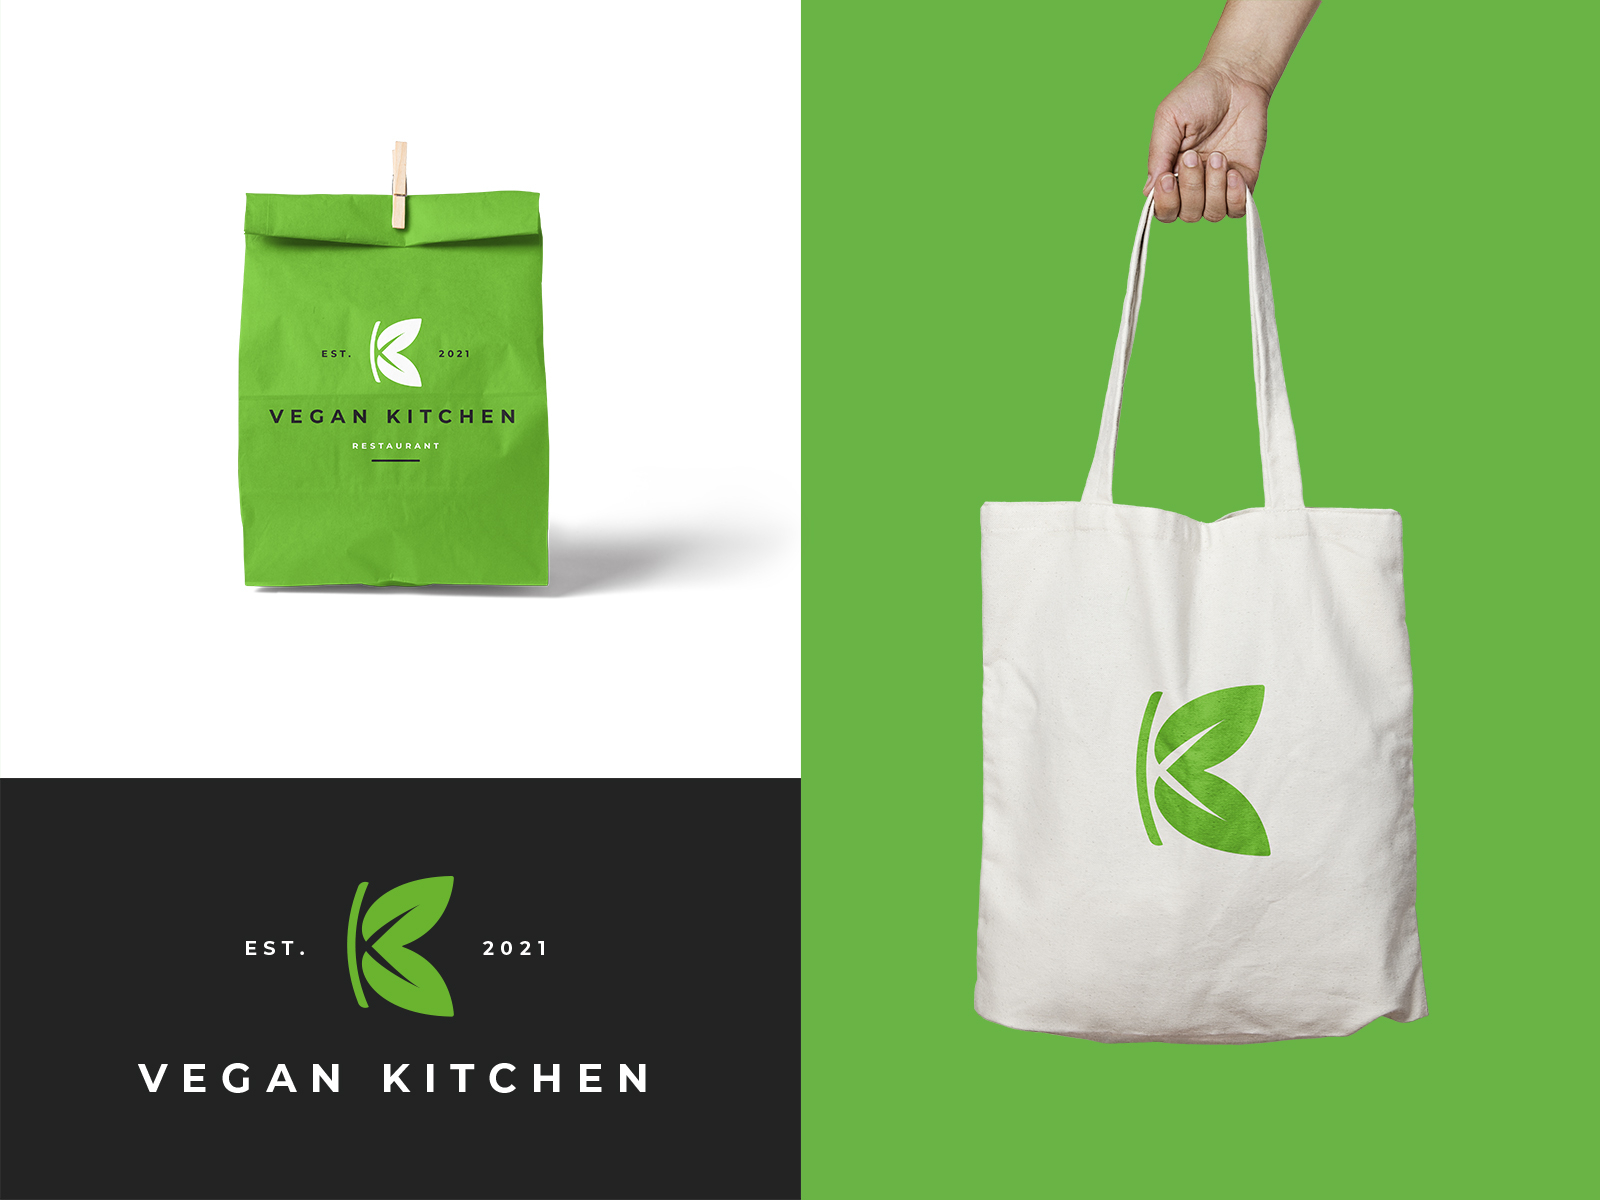 Vegan Kitchen Branding (4/4) by Romeu Pinho on Dribbble